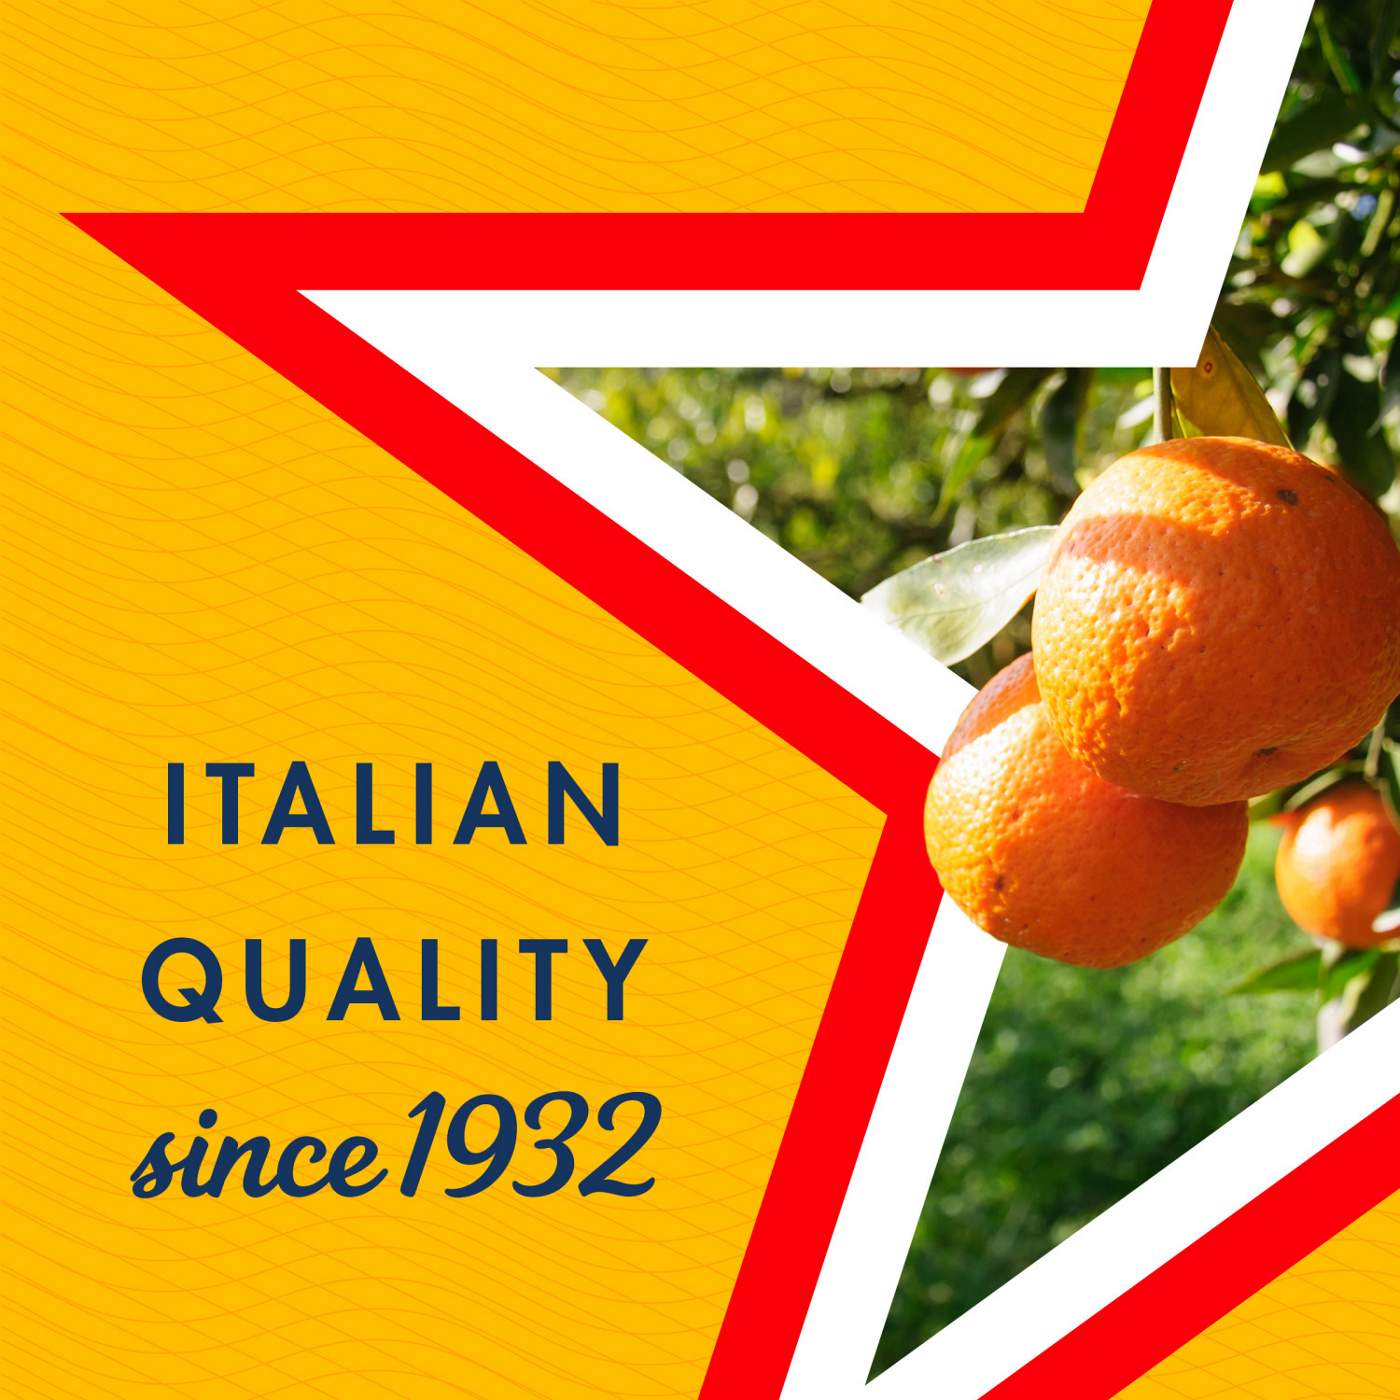 San Pellegrino Aranciata Rossa Blood Orange Italian Sparkling Drink 6 pk Cans; image 3 of 7